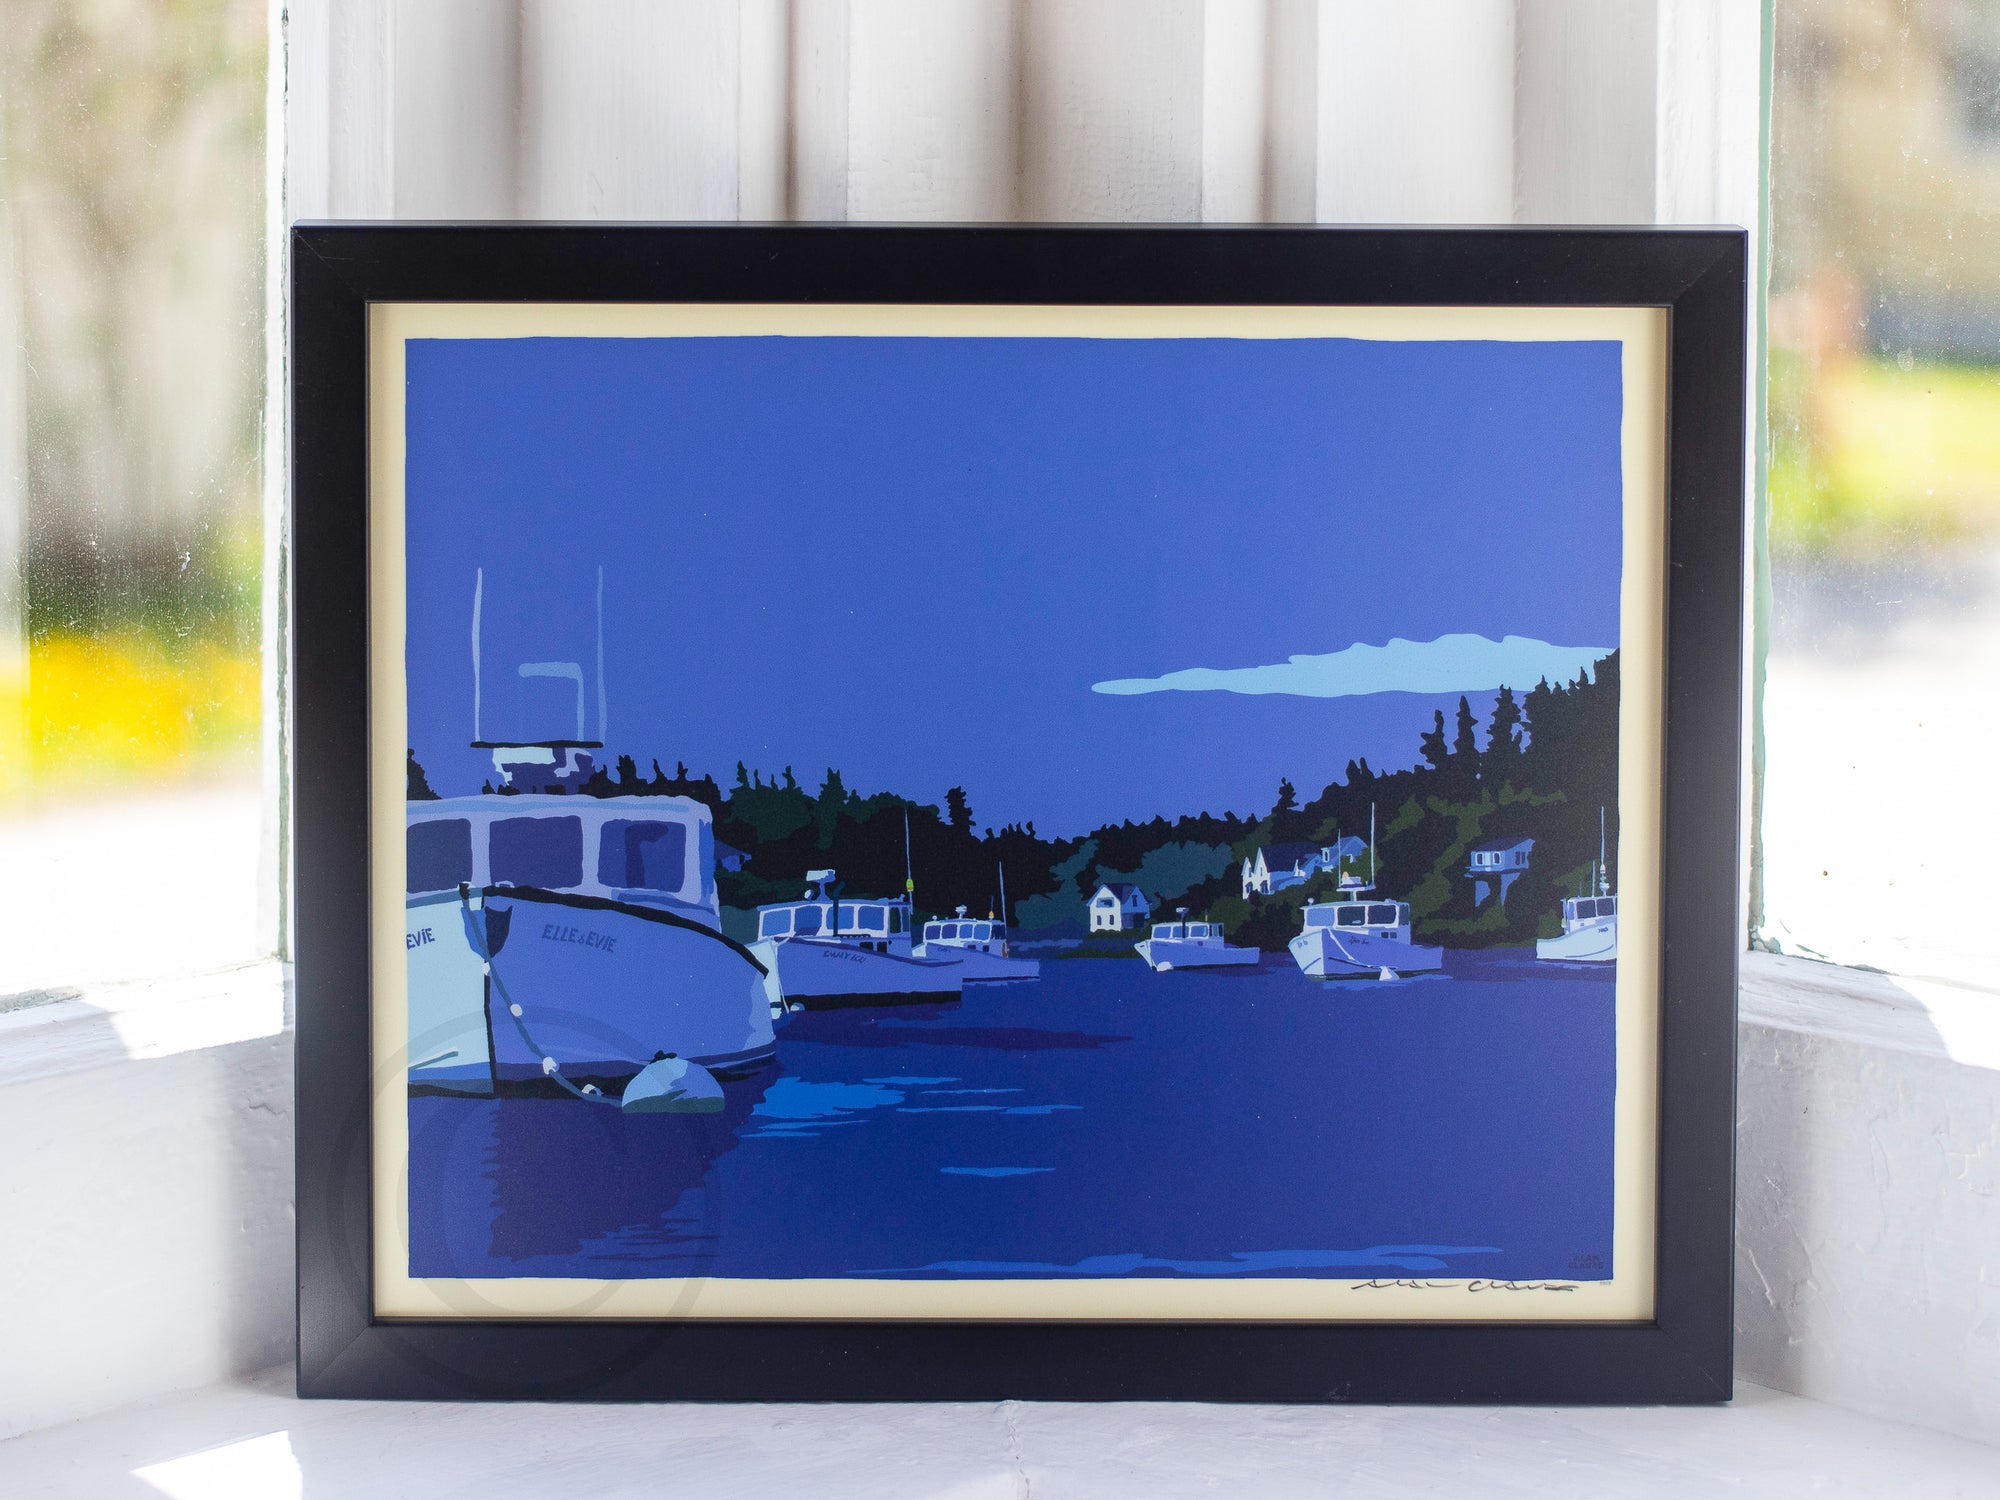 Moonlight Over Port Clyde Art Print 8" x 10" Horizontal Framed Wall Poster By Alan Claude - Maine